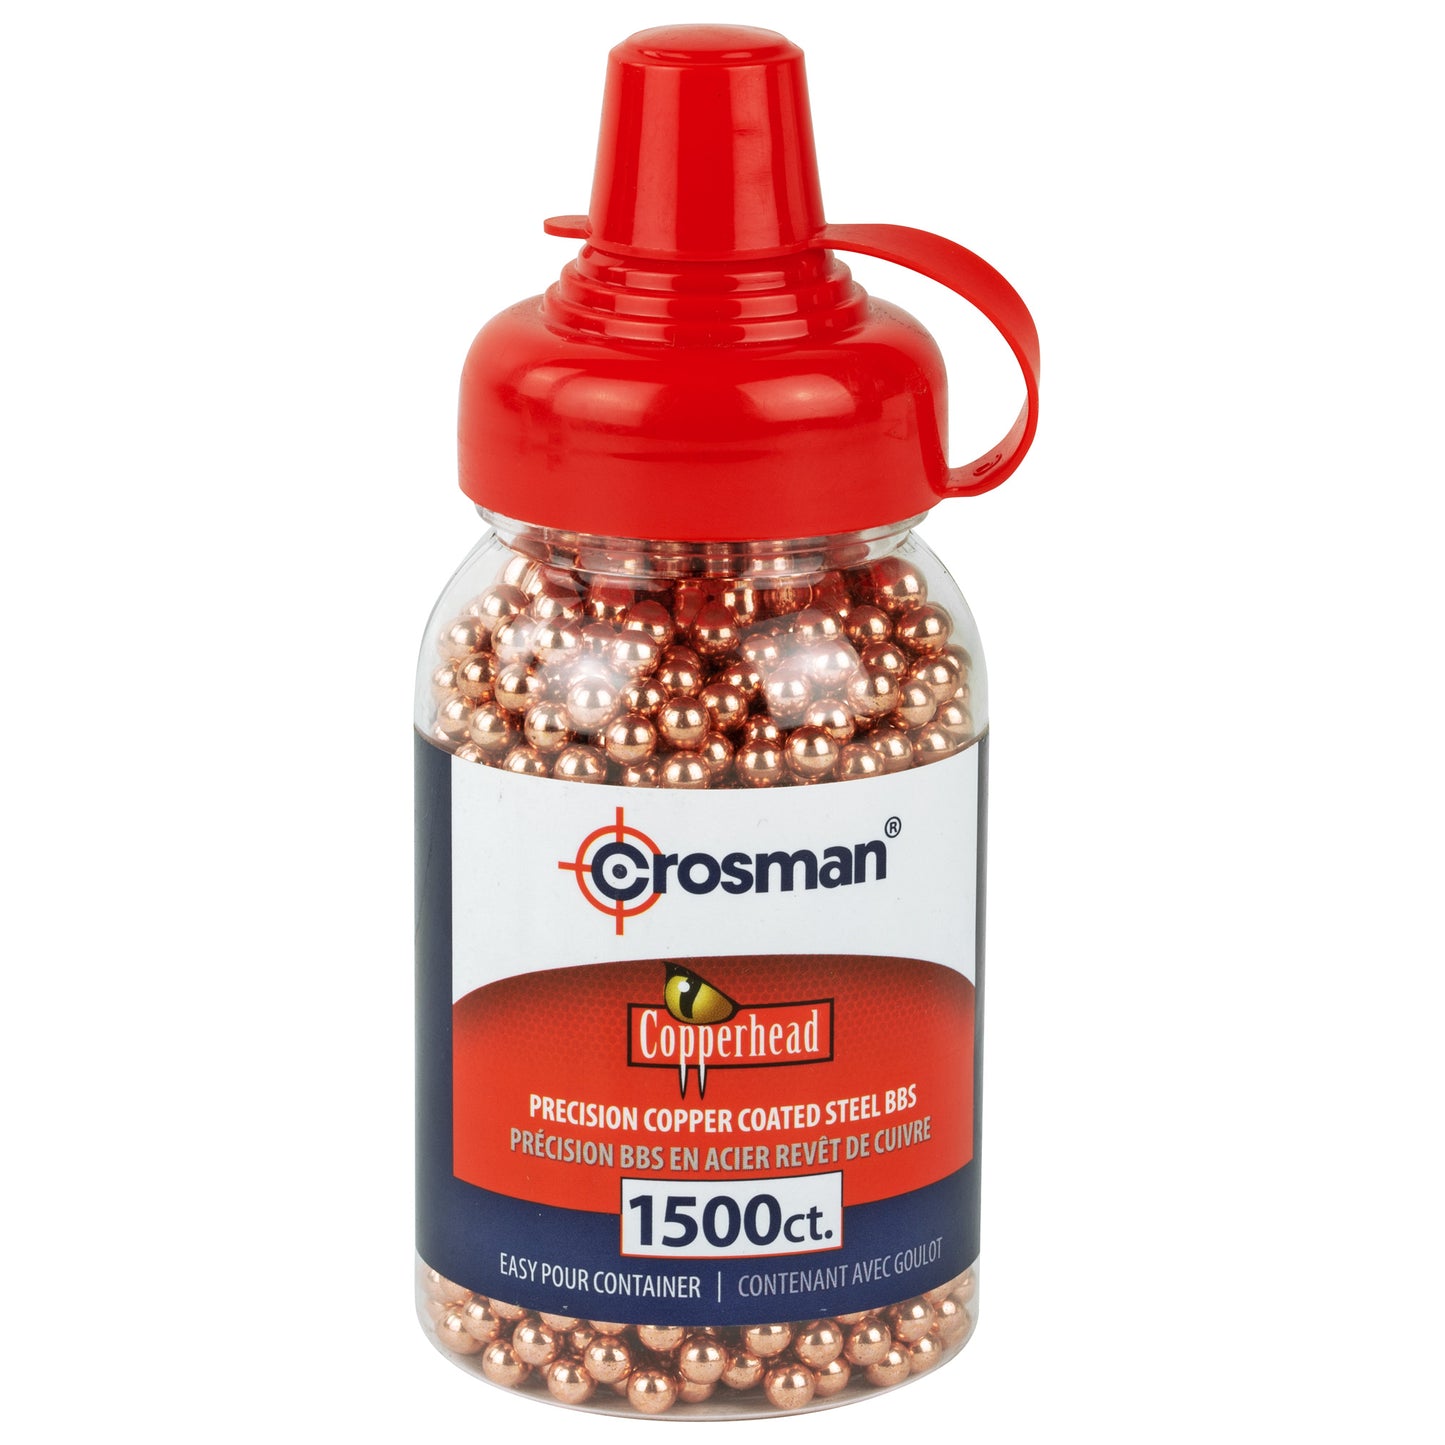 Crosman Copperhead .177 Caliber BB 1500 BB's Per Bottle Plastic Bottle 0737 - California Shooting Supplies